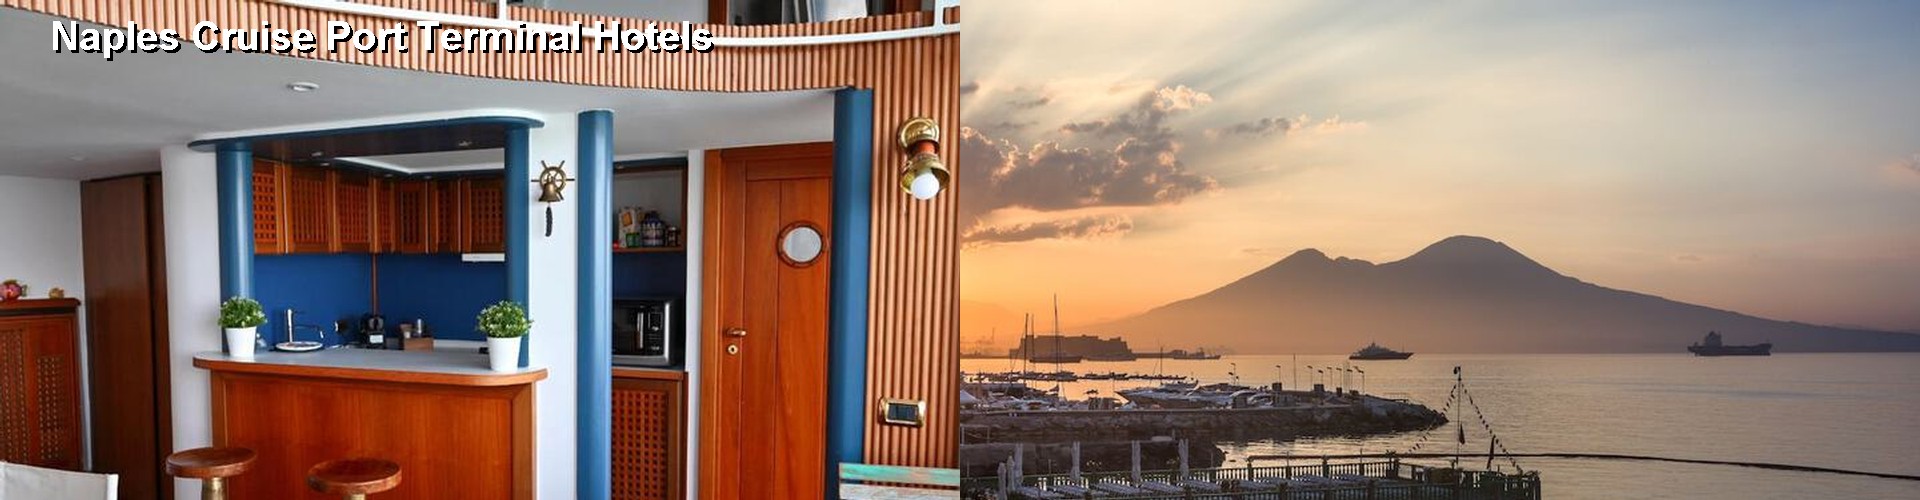 5 Best Hotels near Naples Cruise Port Terminal